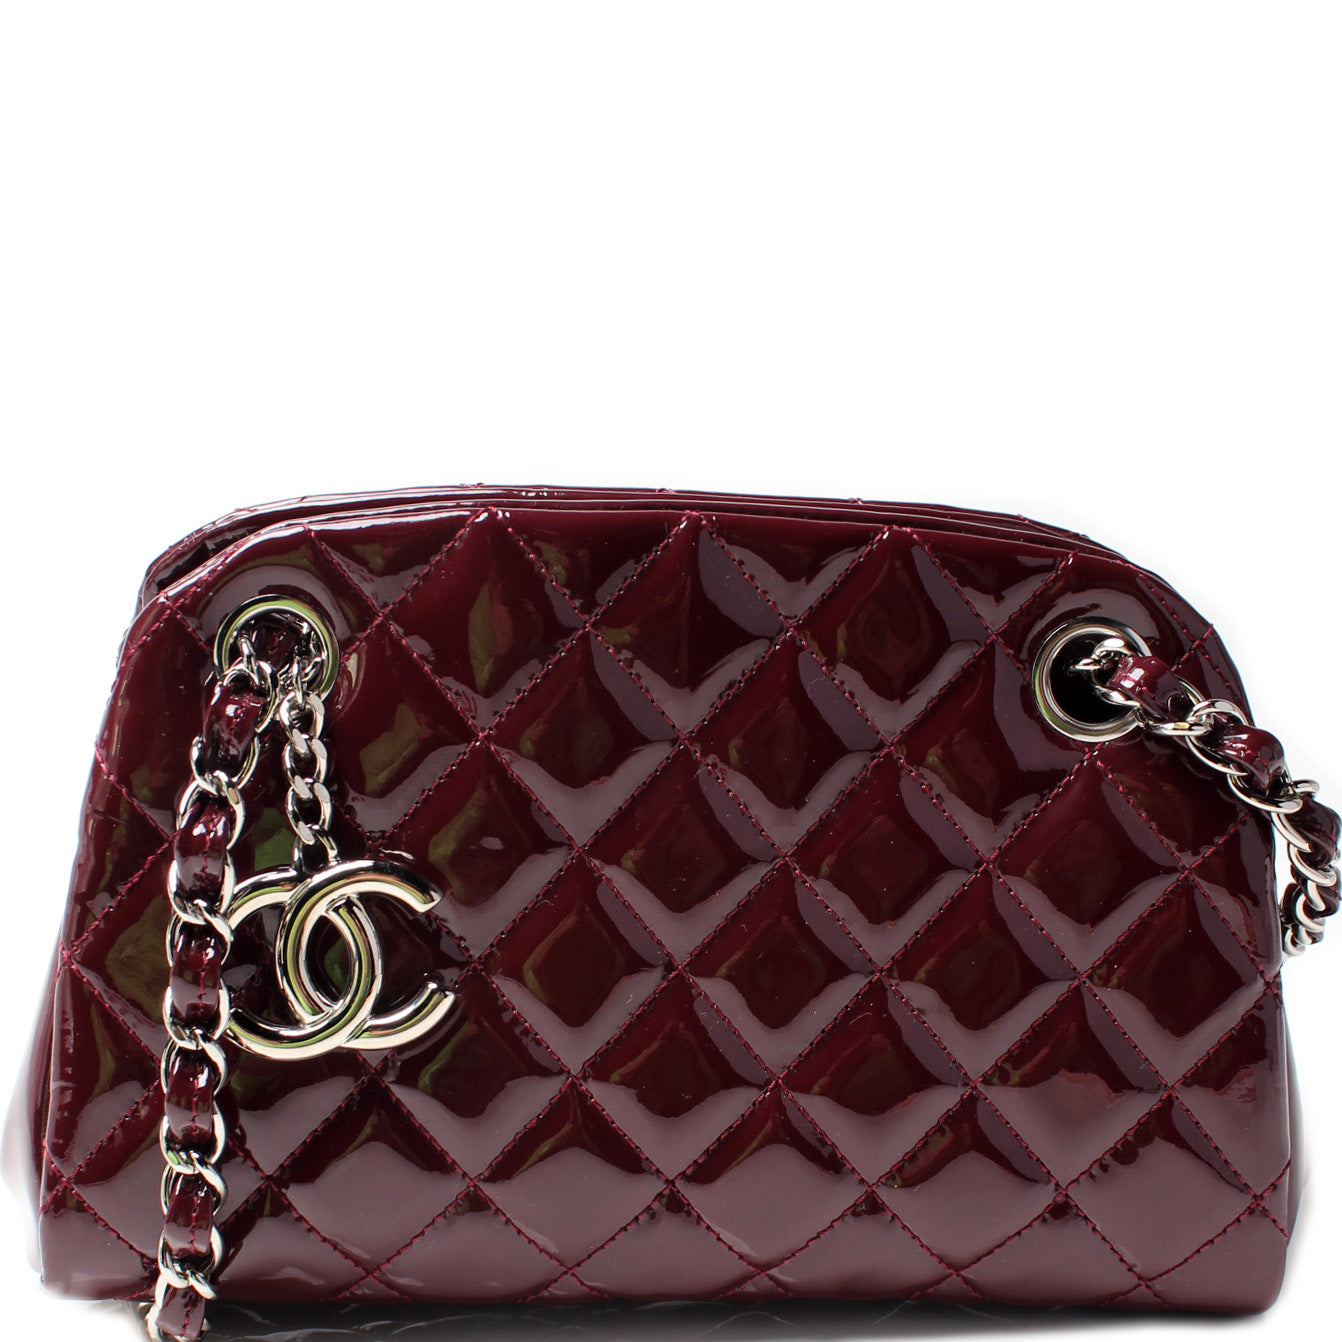 Chanel Mademoiselle Vintage Bag